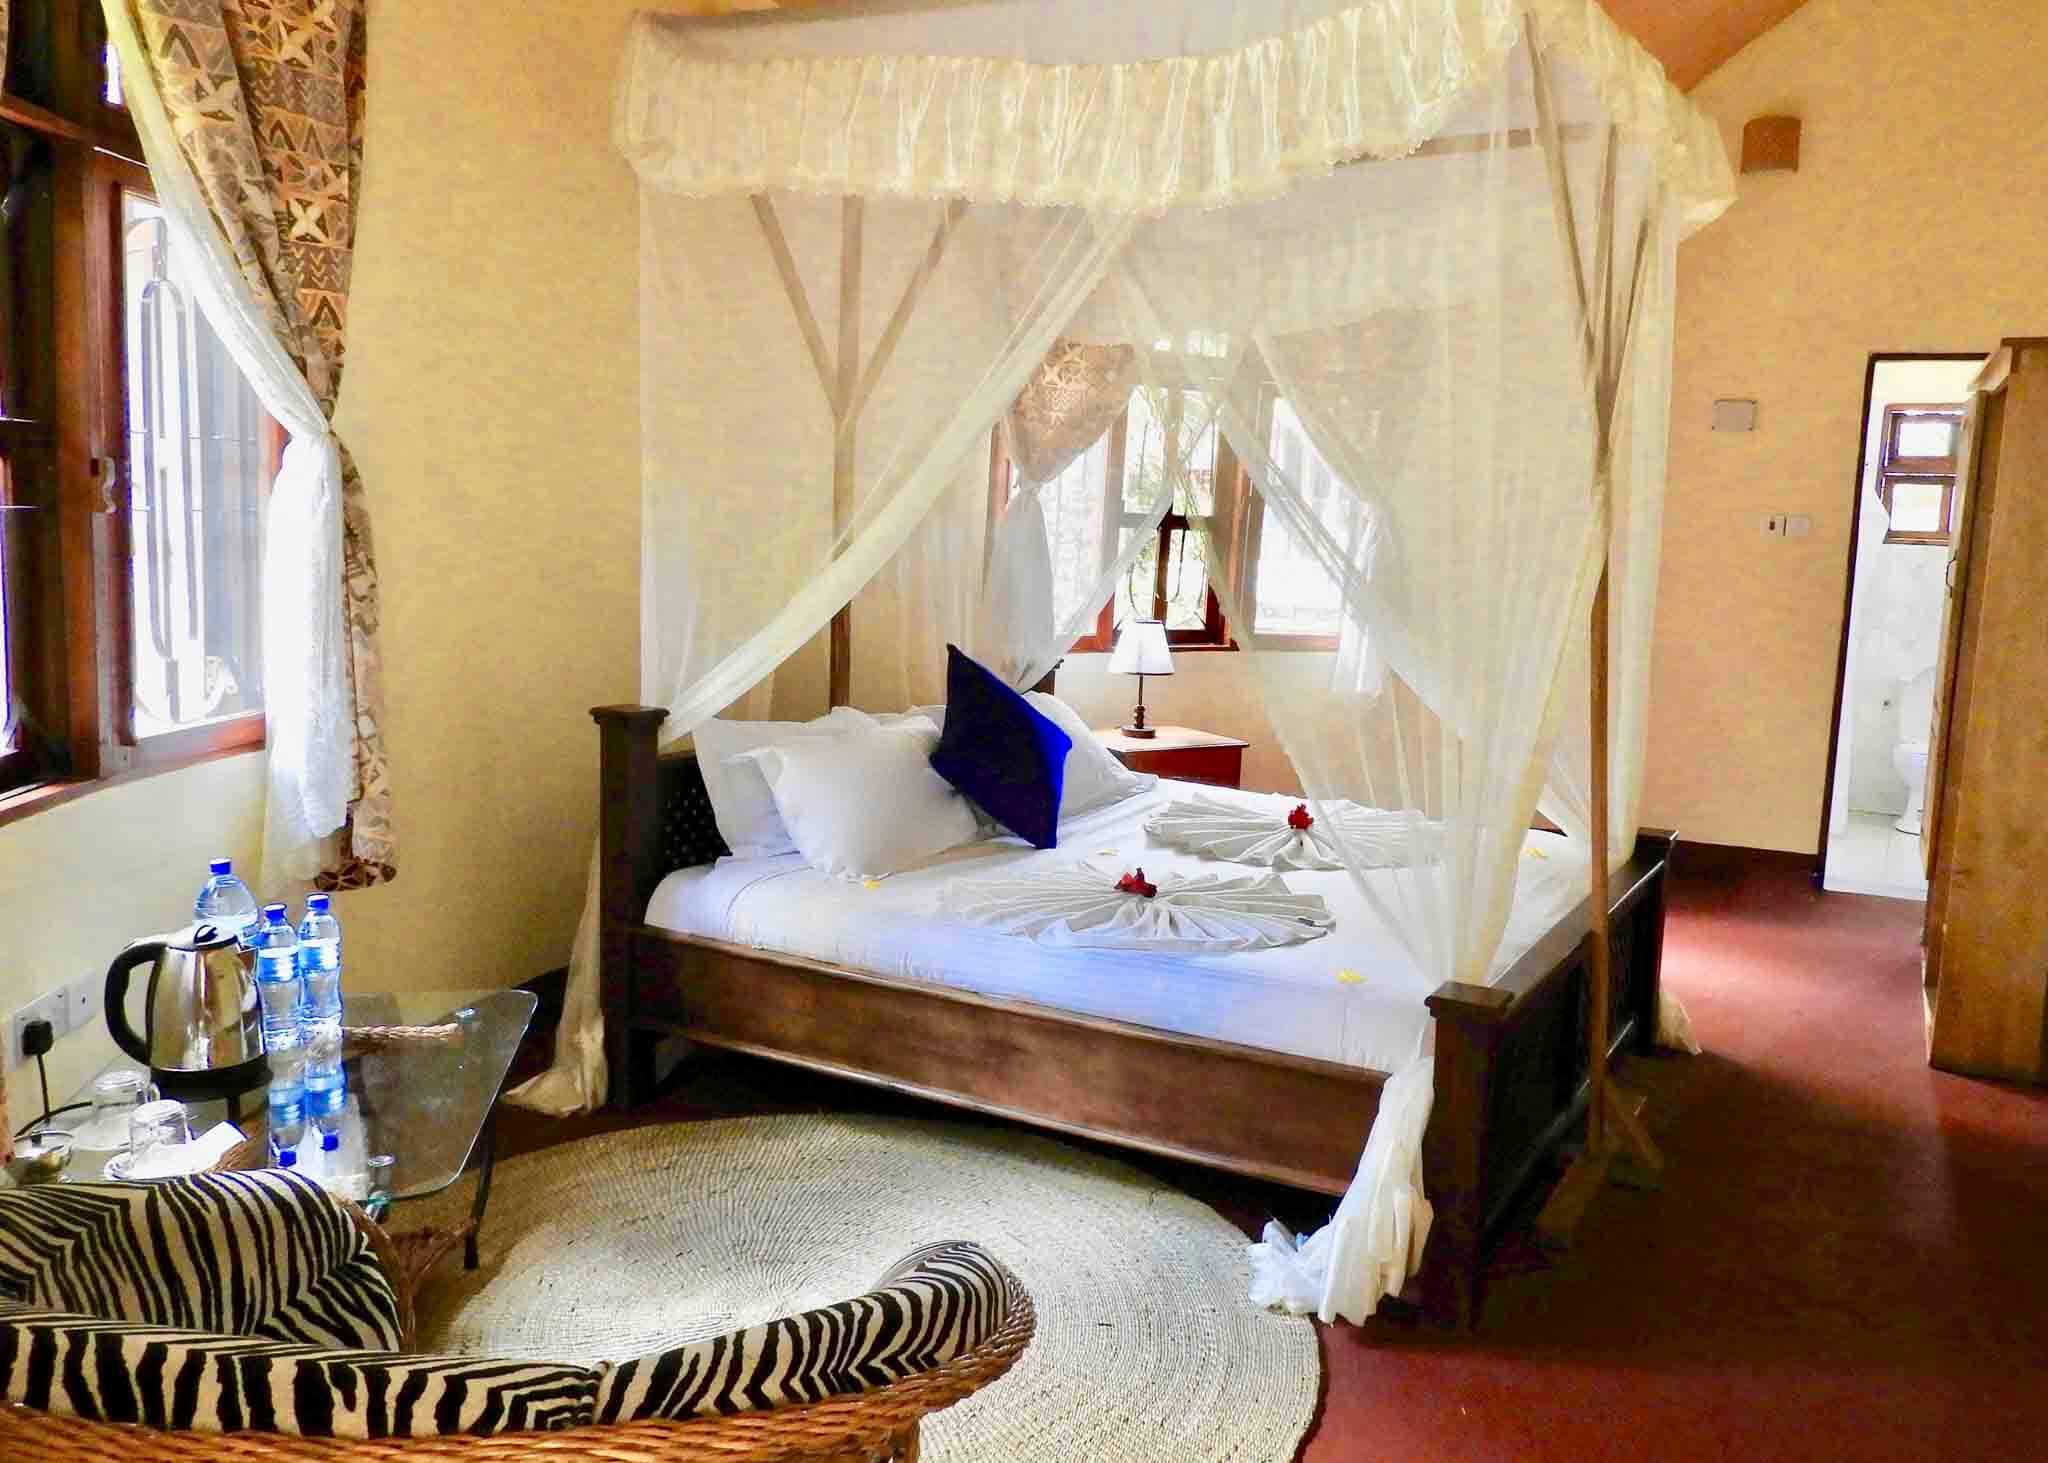 Vijiji Center Lodge, Arusha, Tanzania